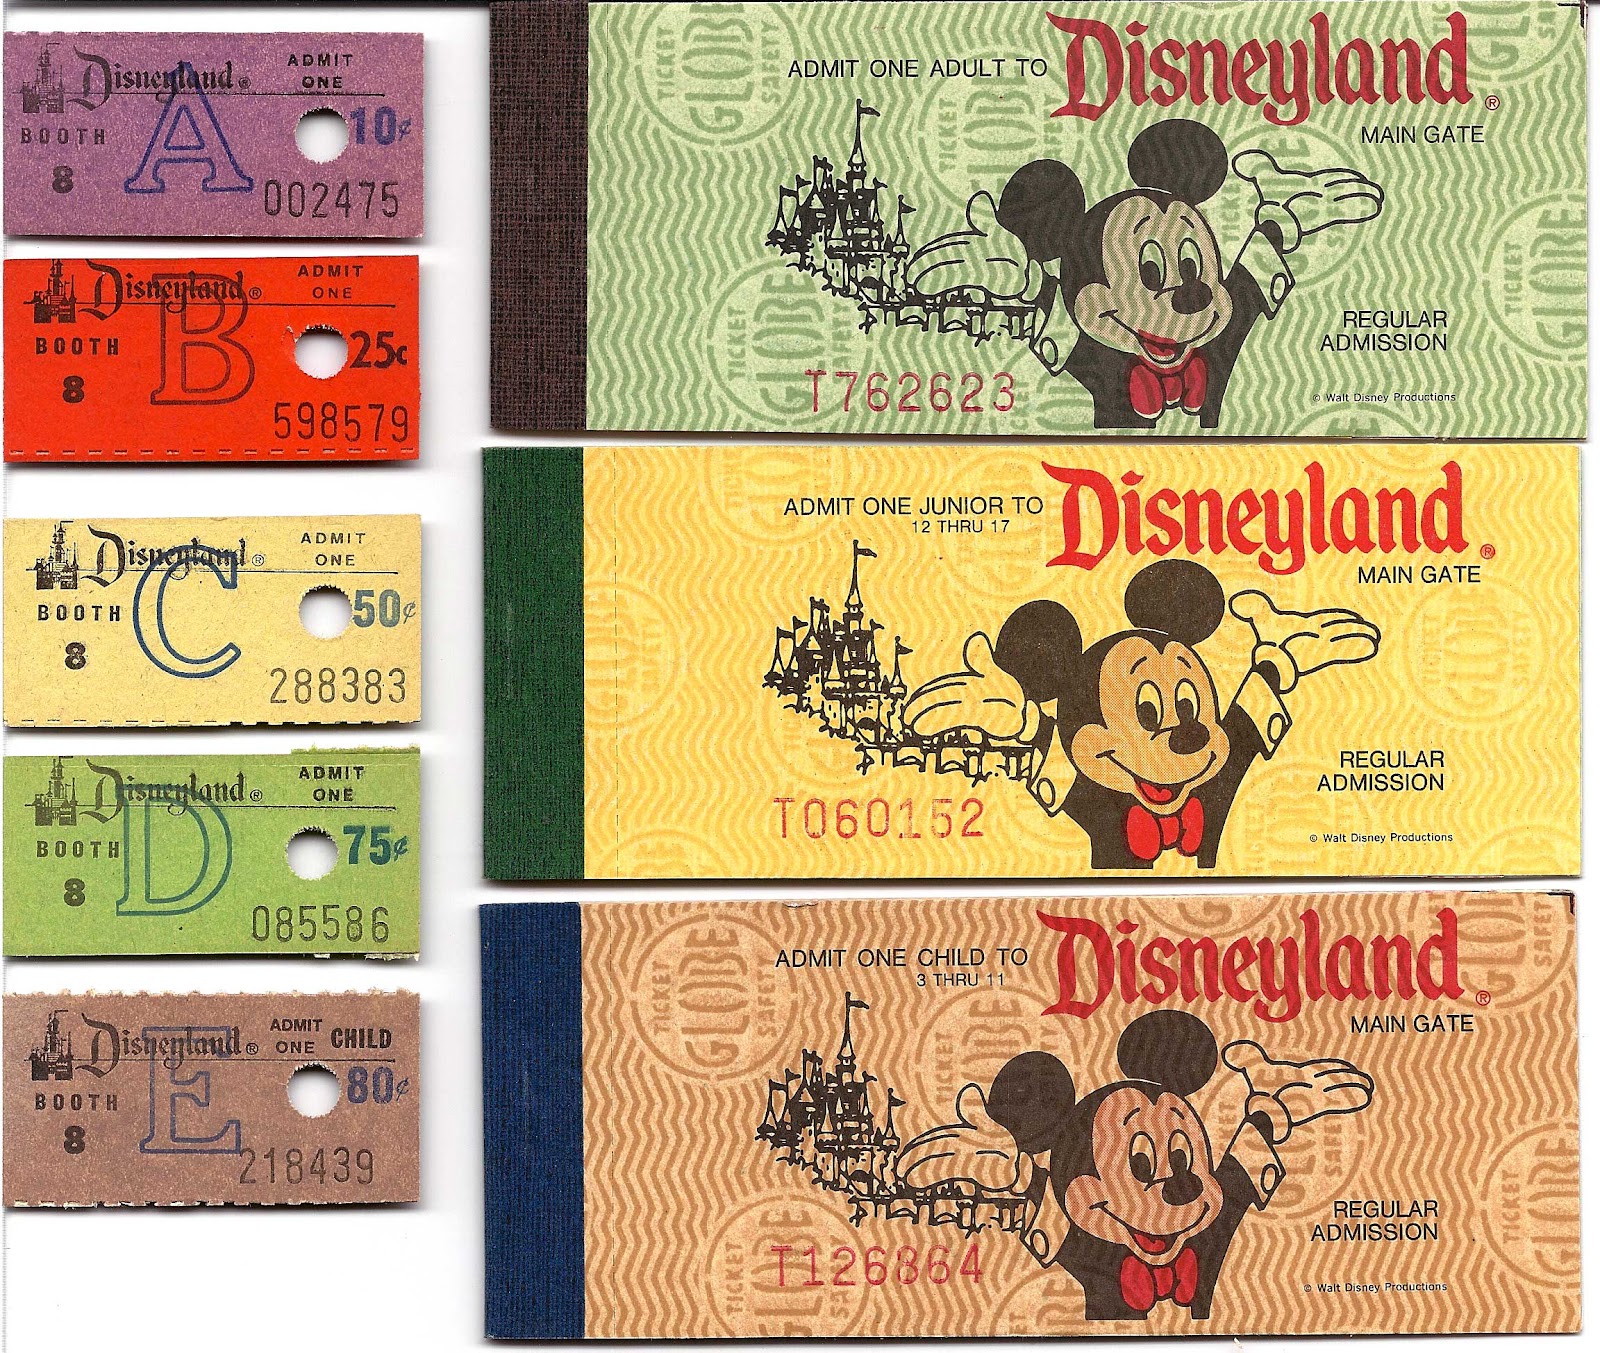 Vintage Disneyland Tickets: The Last Disneyland Ticket Book - June 15, 1982